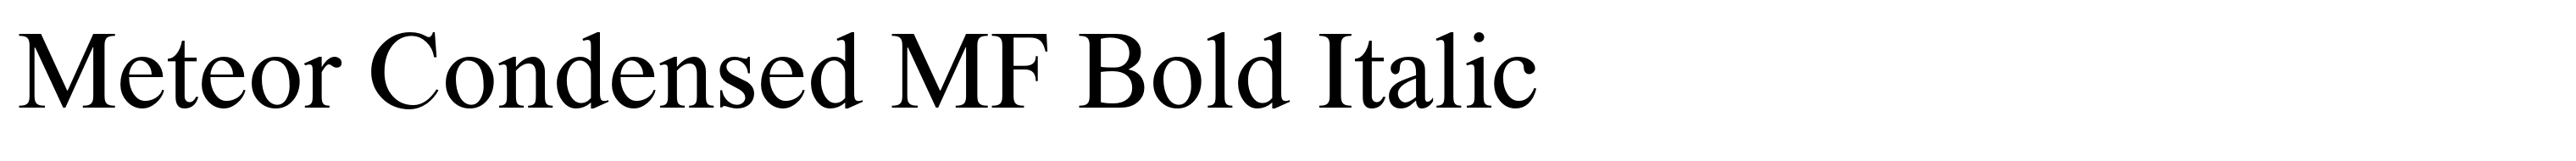 Meteor Condensed MF Bold Italic